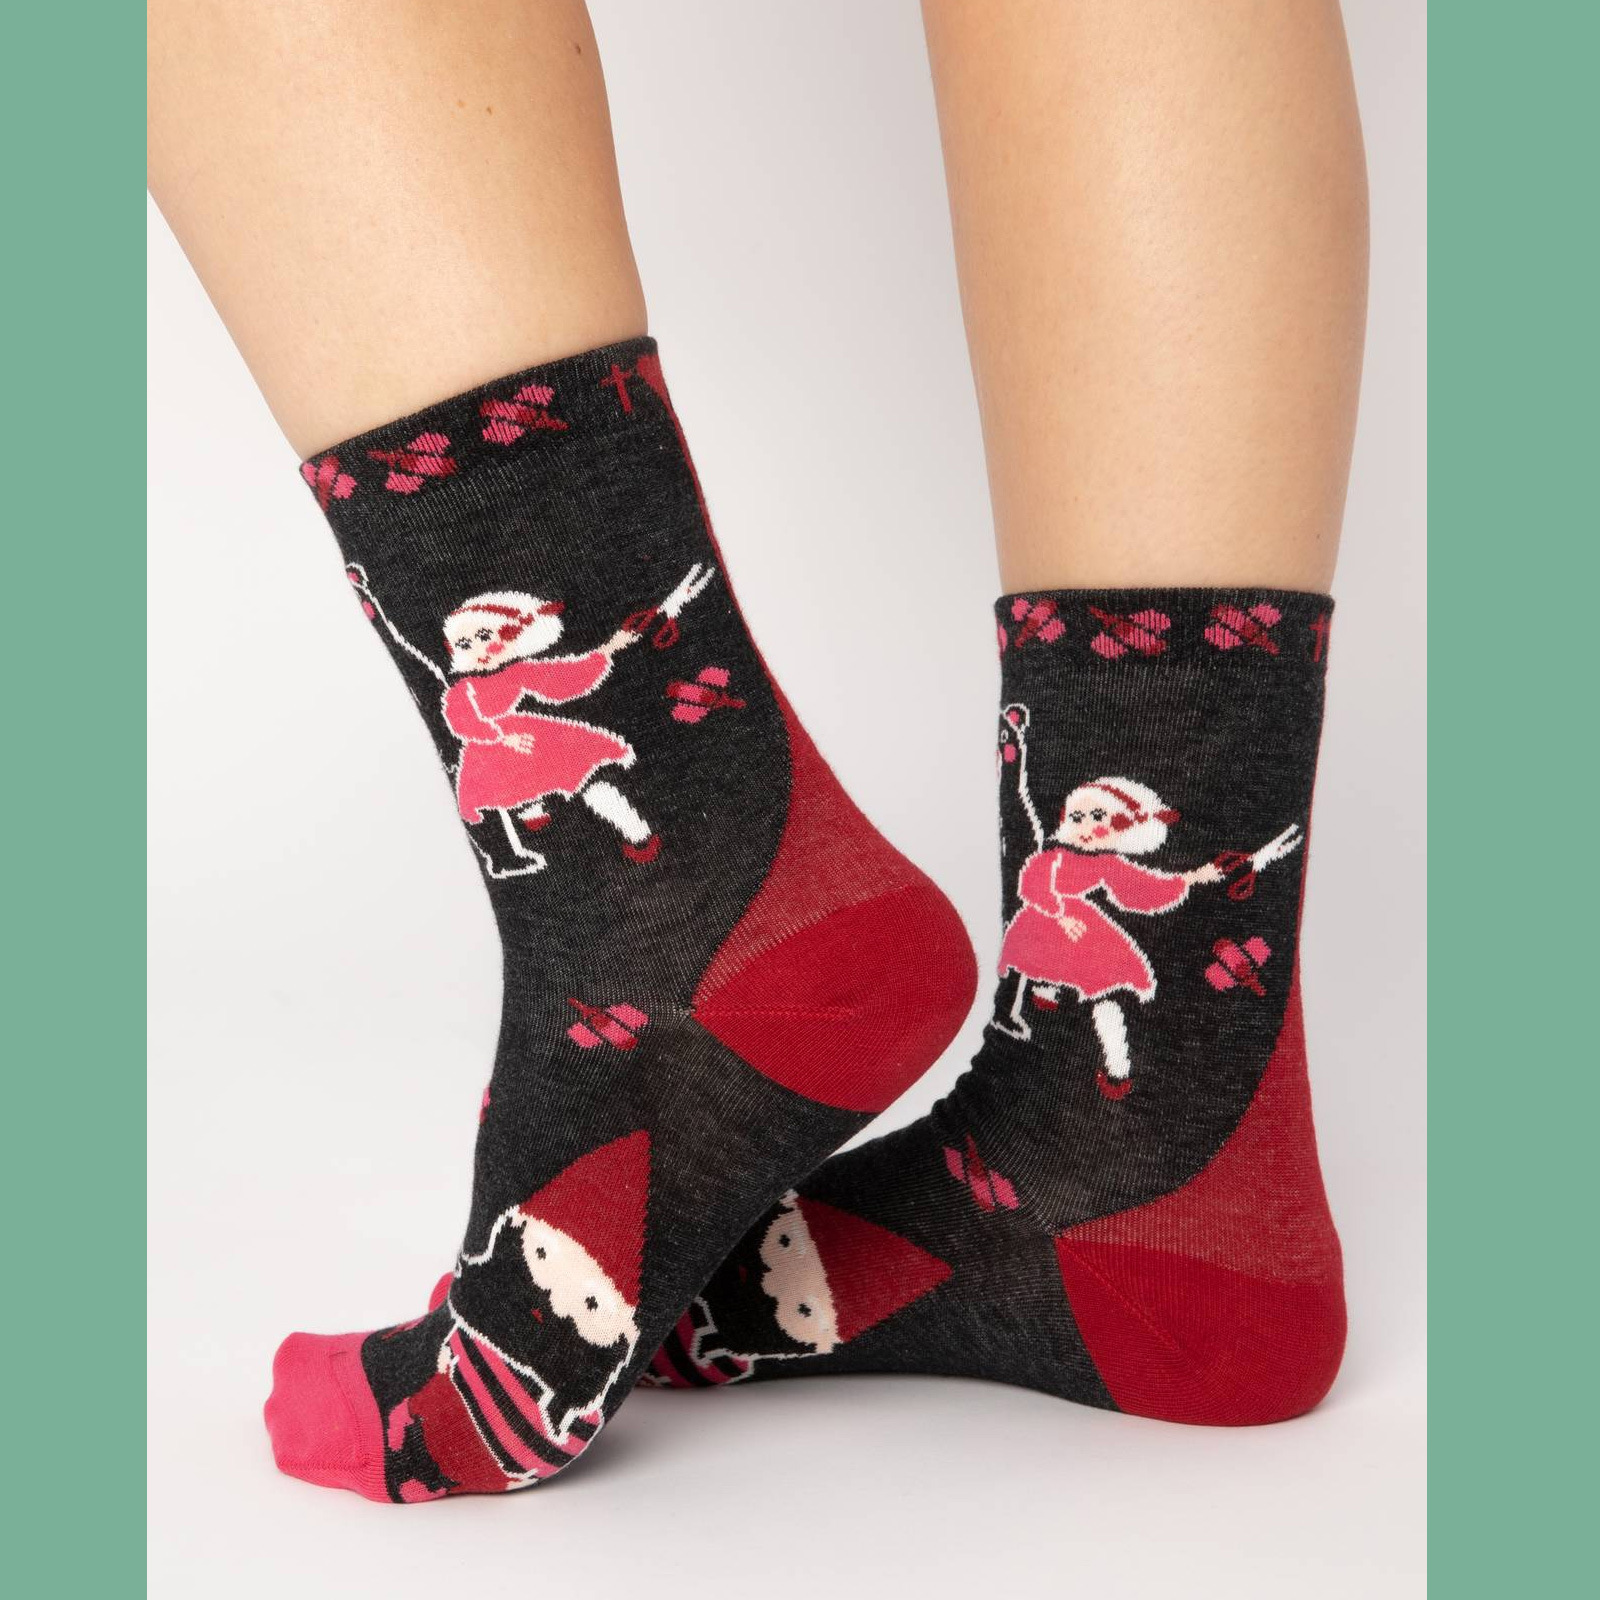  Blutsgeschwister Socken sensational steps , One Size ( ca. 38 - 40 ),  i love fairytales